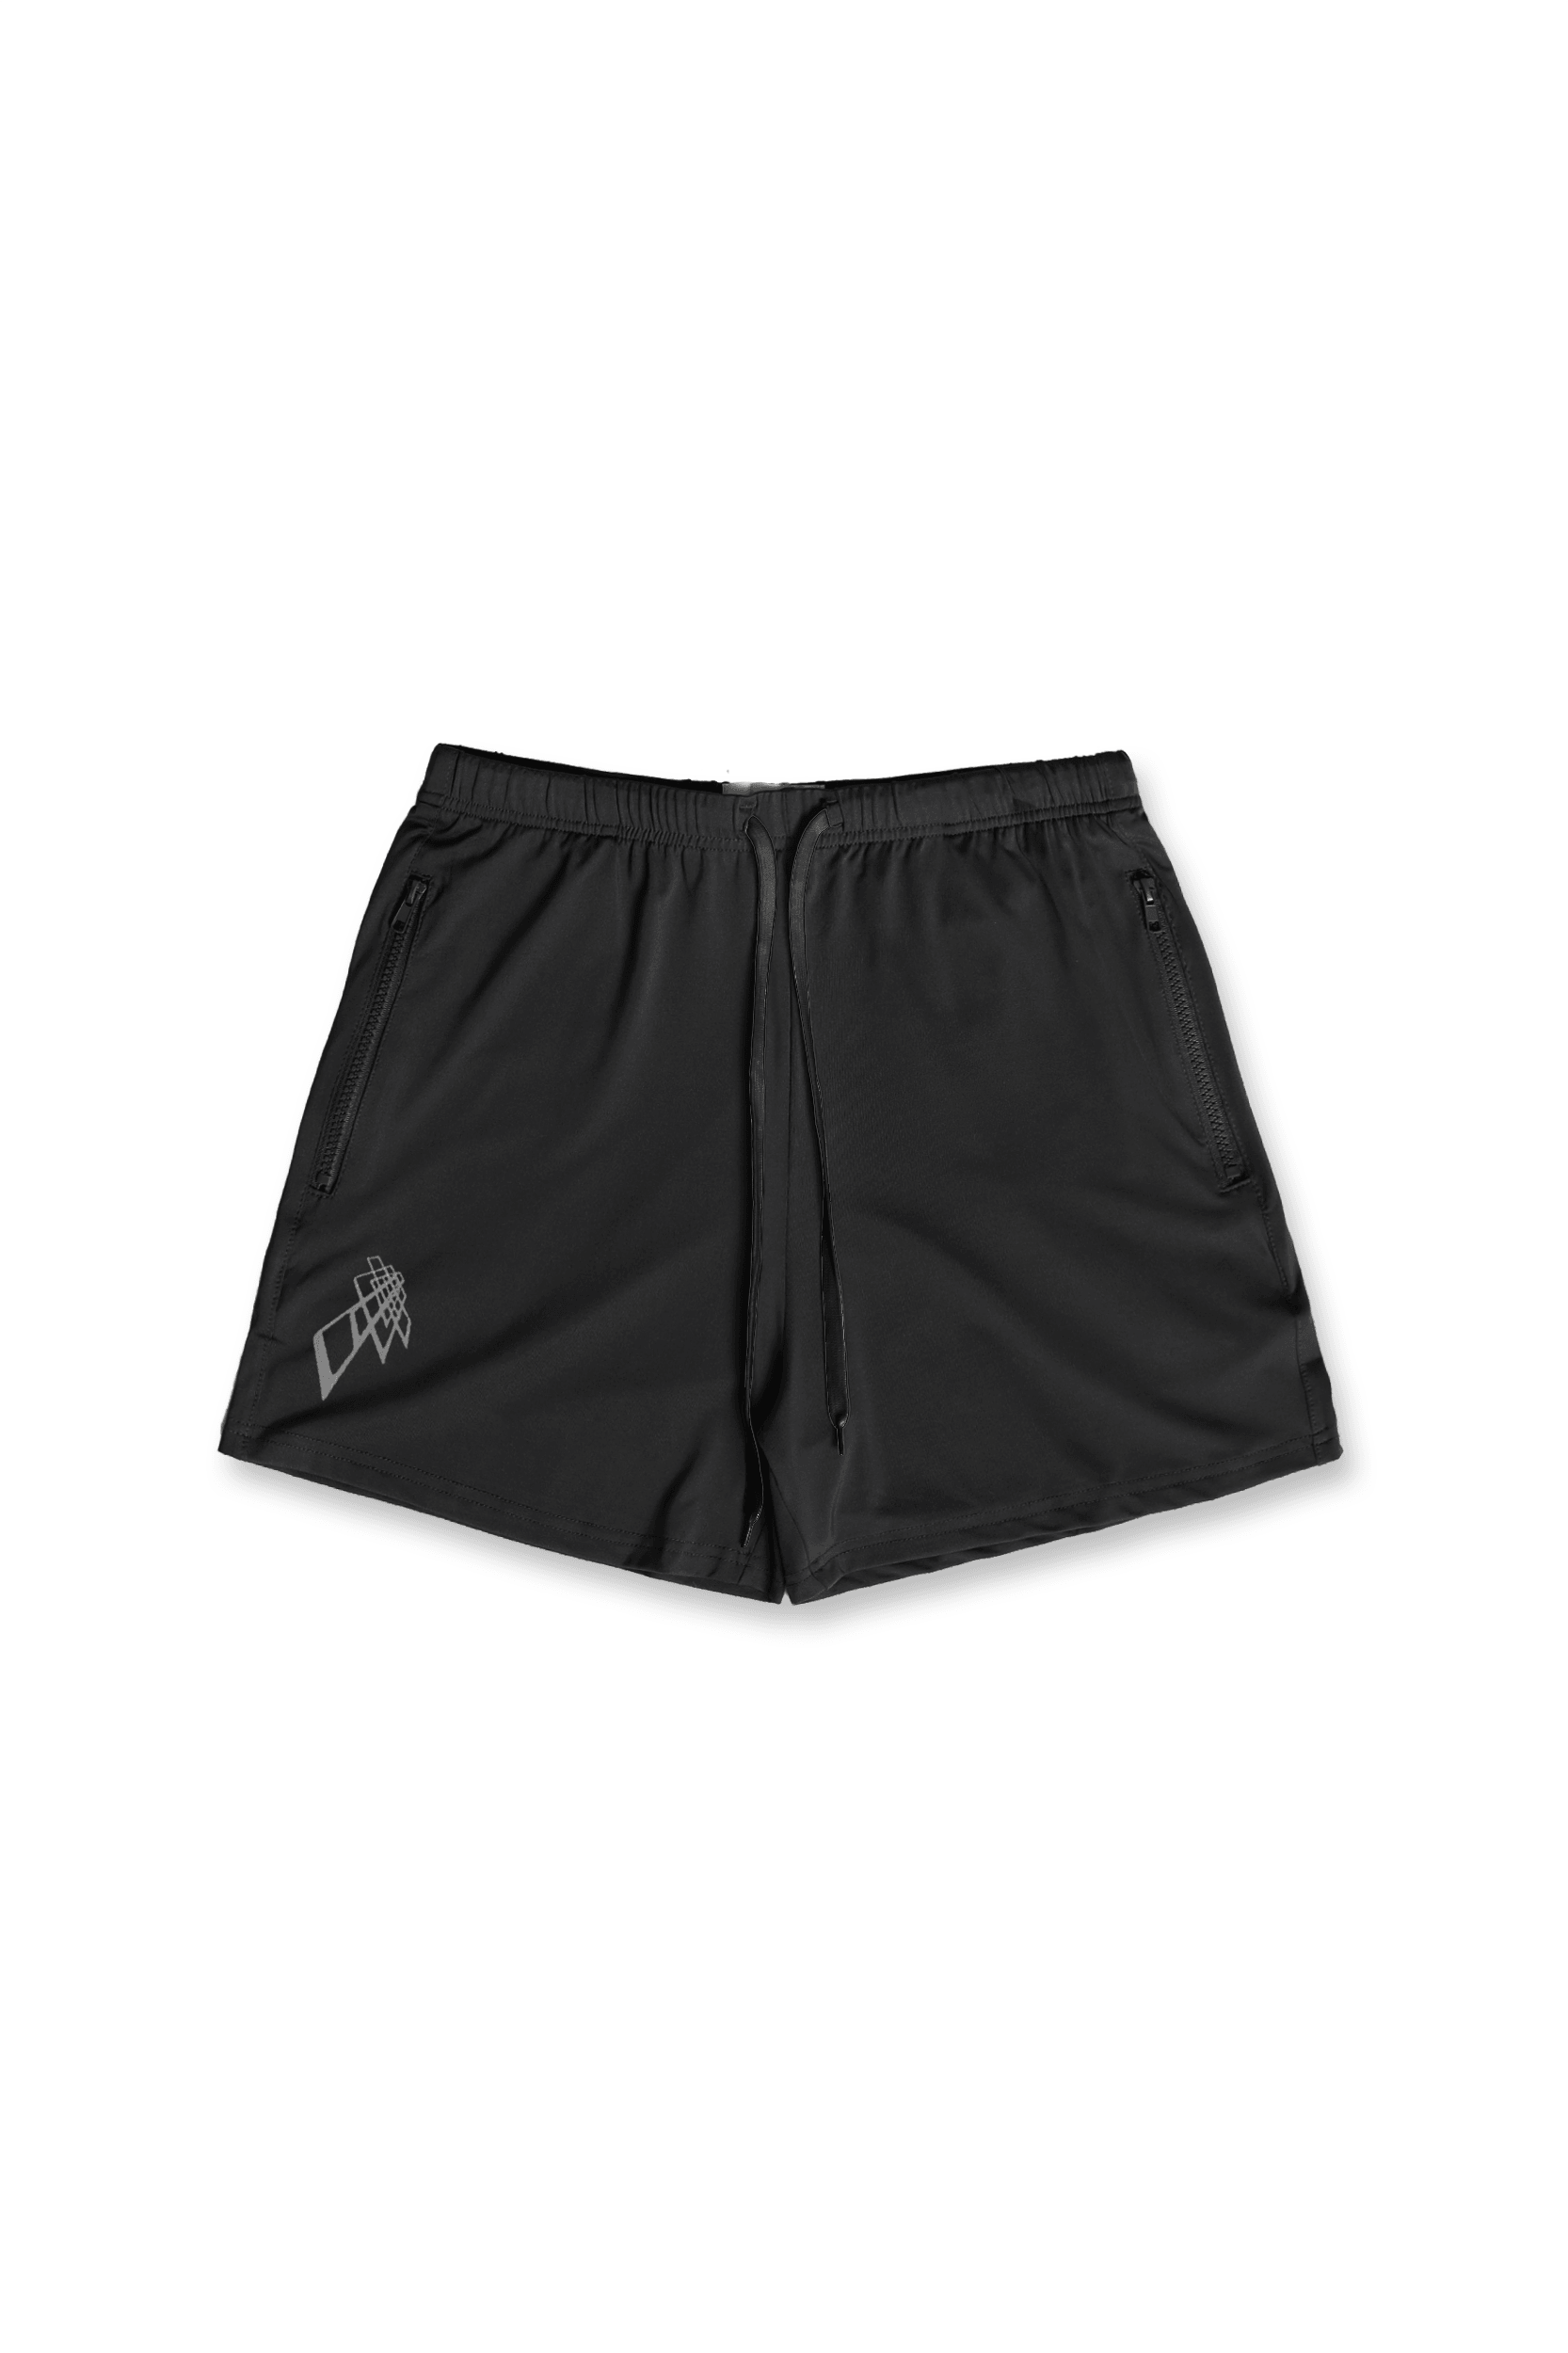 Agile Bodybuilding 4'' Shorts w Zipper Pockets - Noir - Jed North